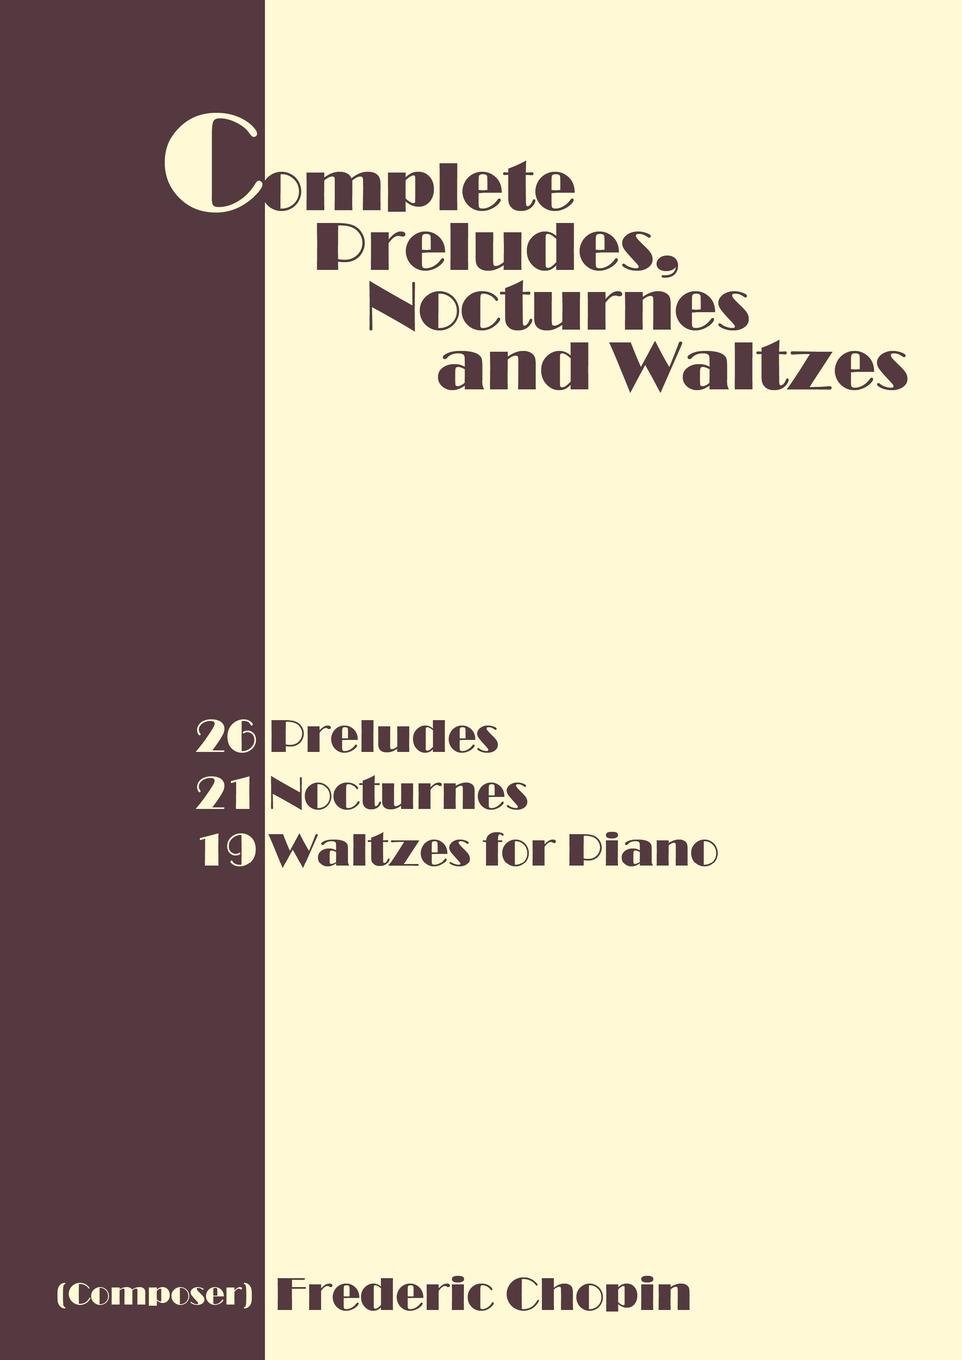 Complete Preludes, Nocturnes and Waltzes. 26 Preludes, 21 Nocturnes, 19 Waltzes for Piano